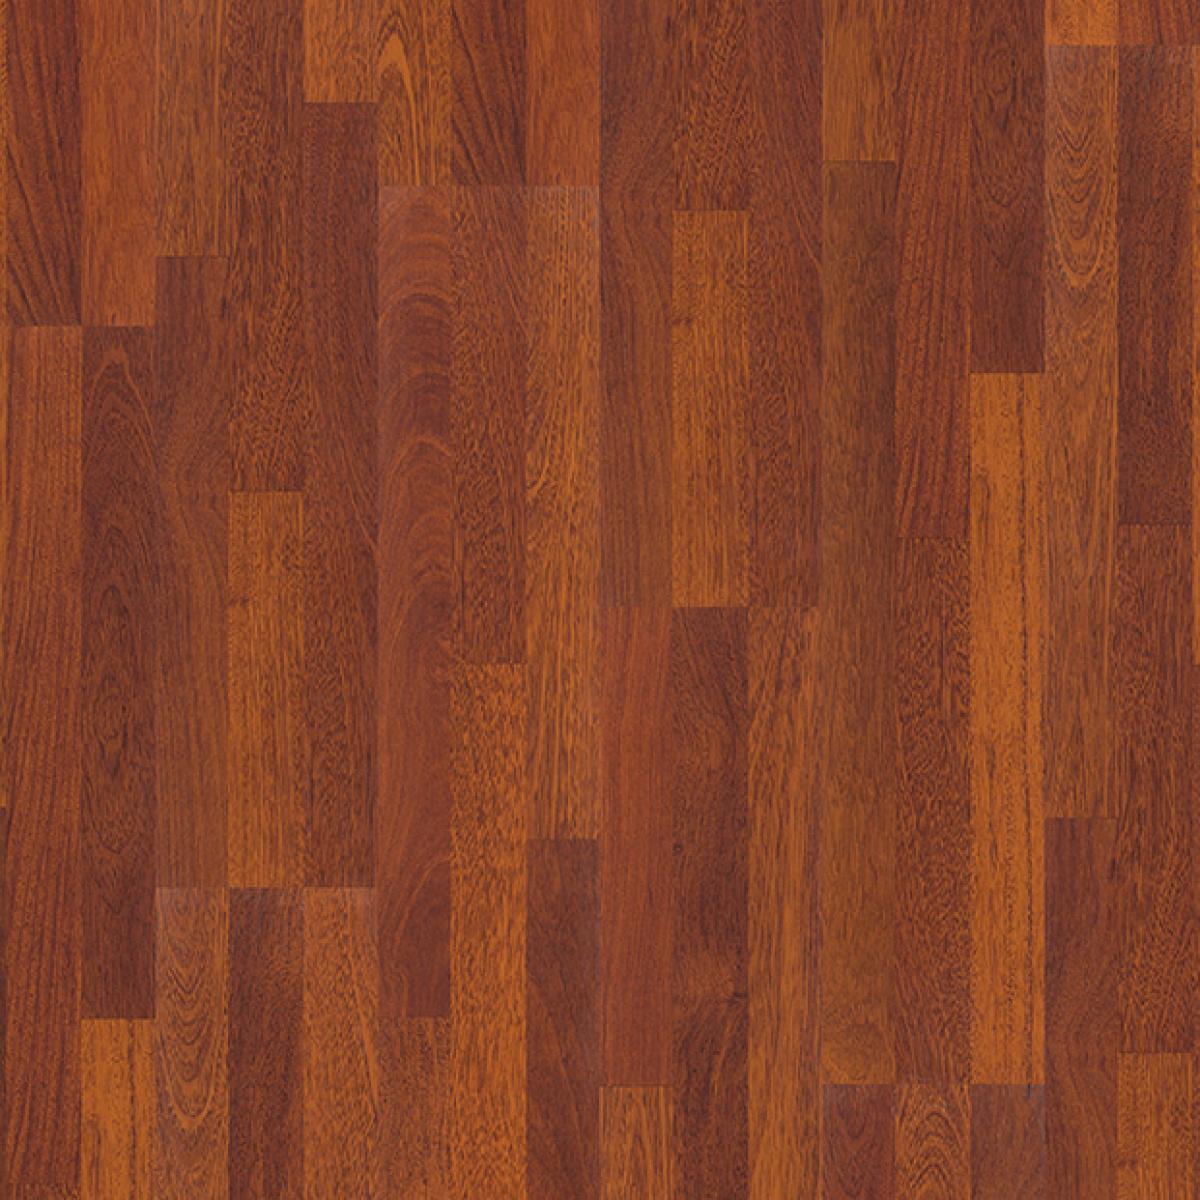 Enhanced Merbau 3 Strip Laminate Flooring, Classic Merbau Laminate Flooring